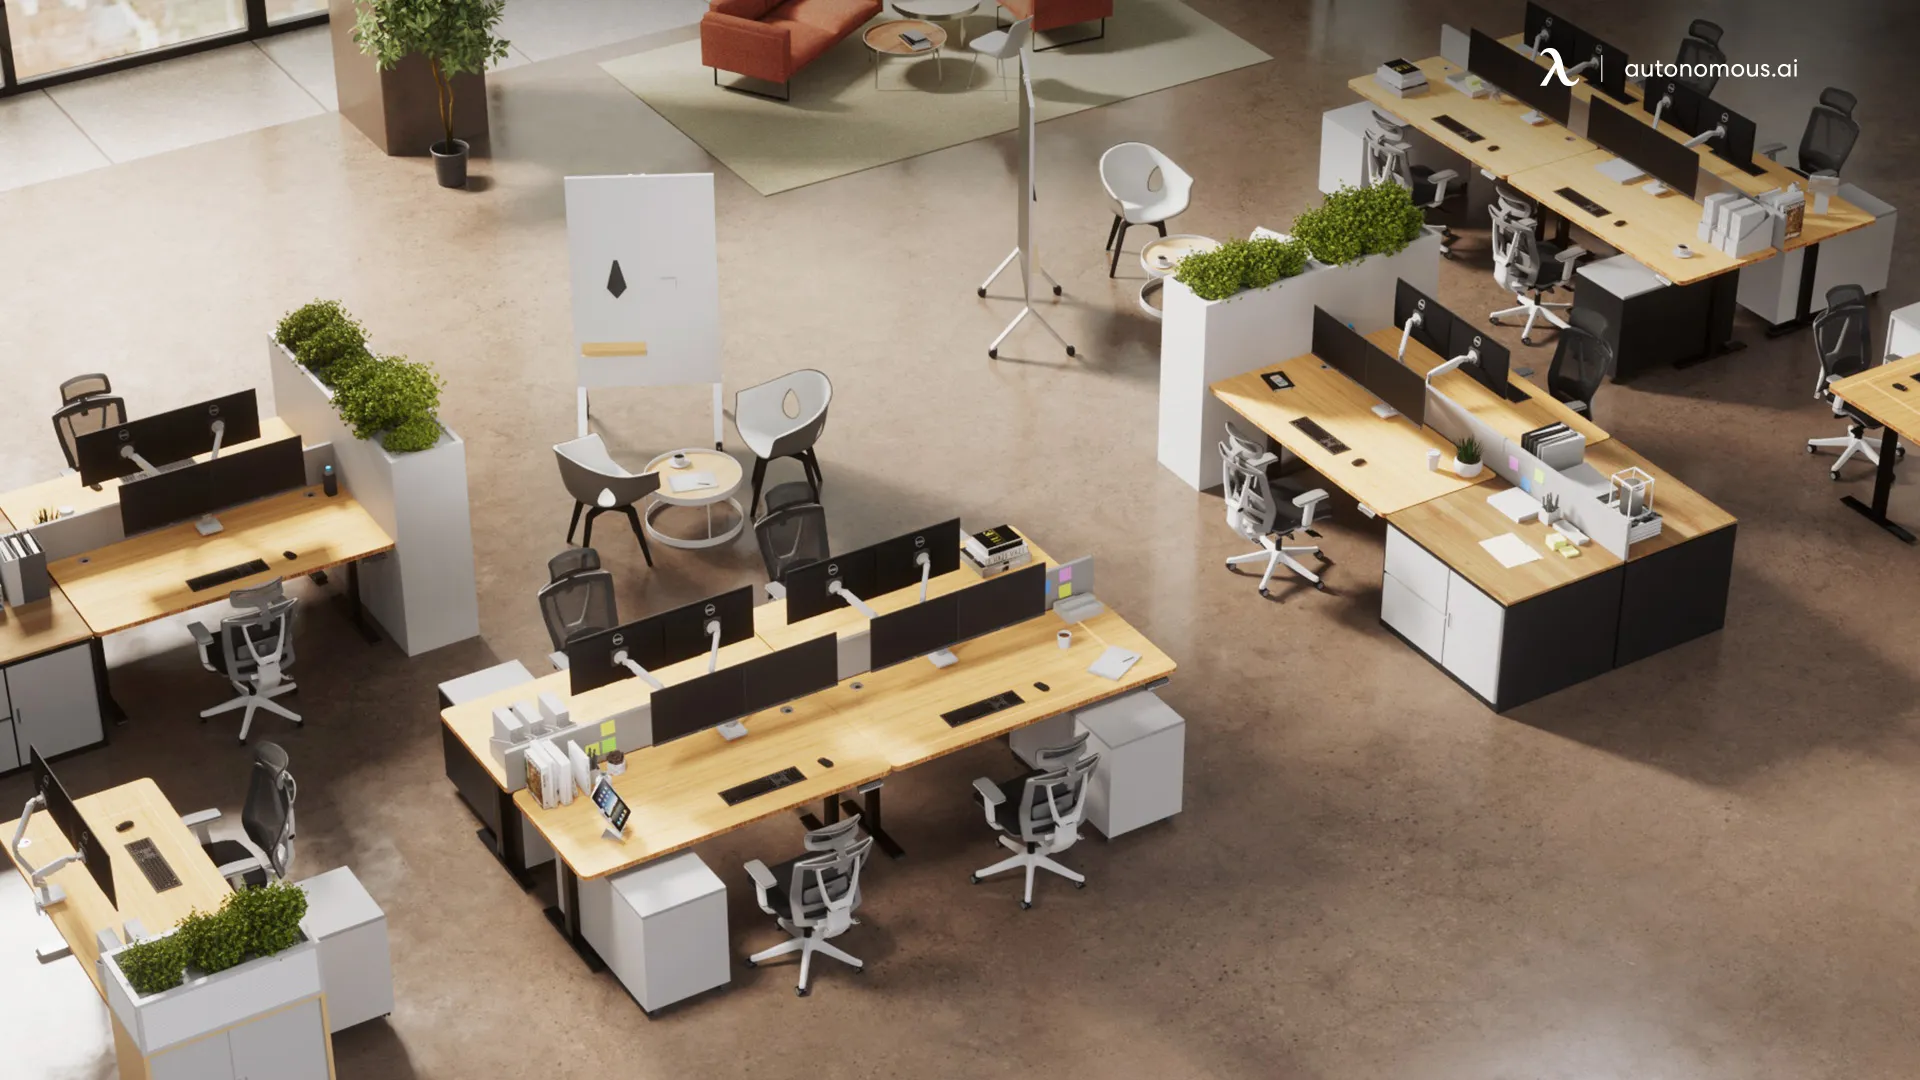 Autonomous furniture store in barrie